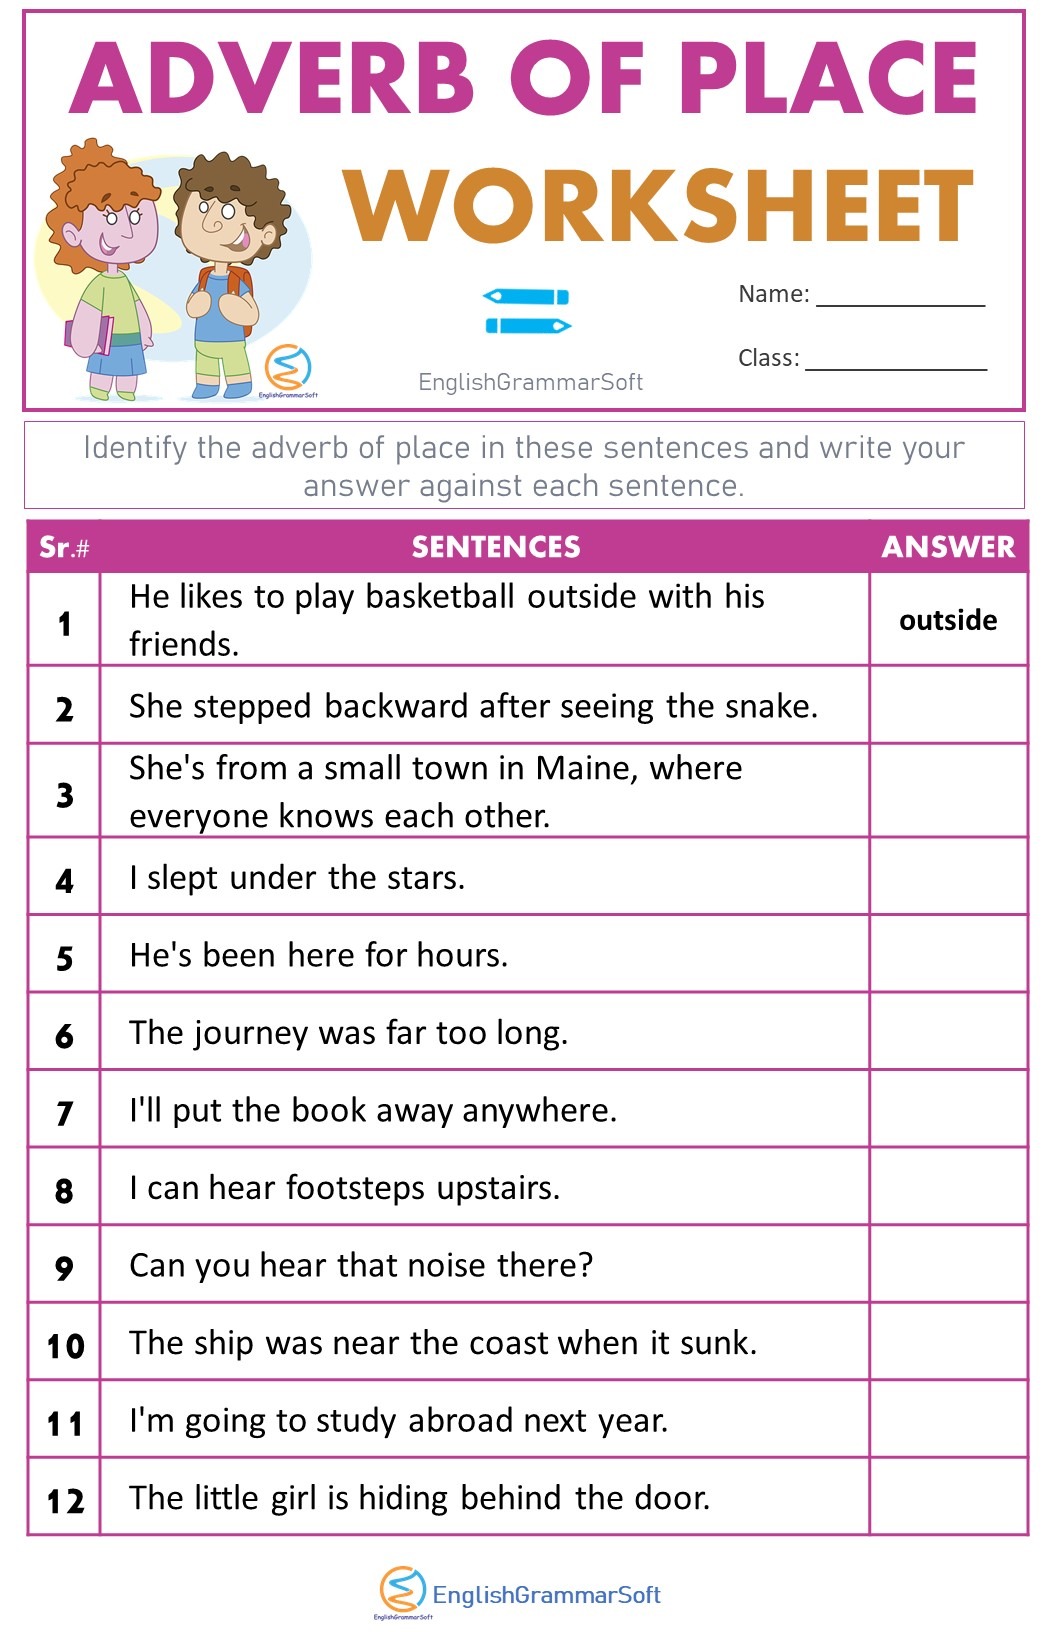 Adverb of Place Worksheet